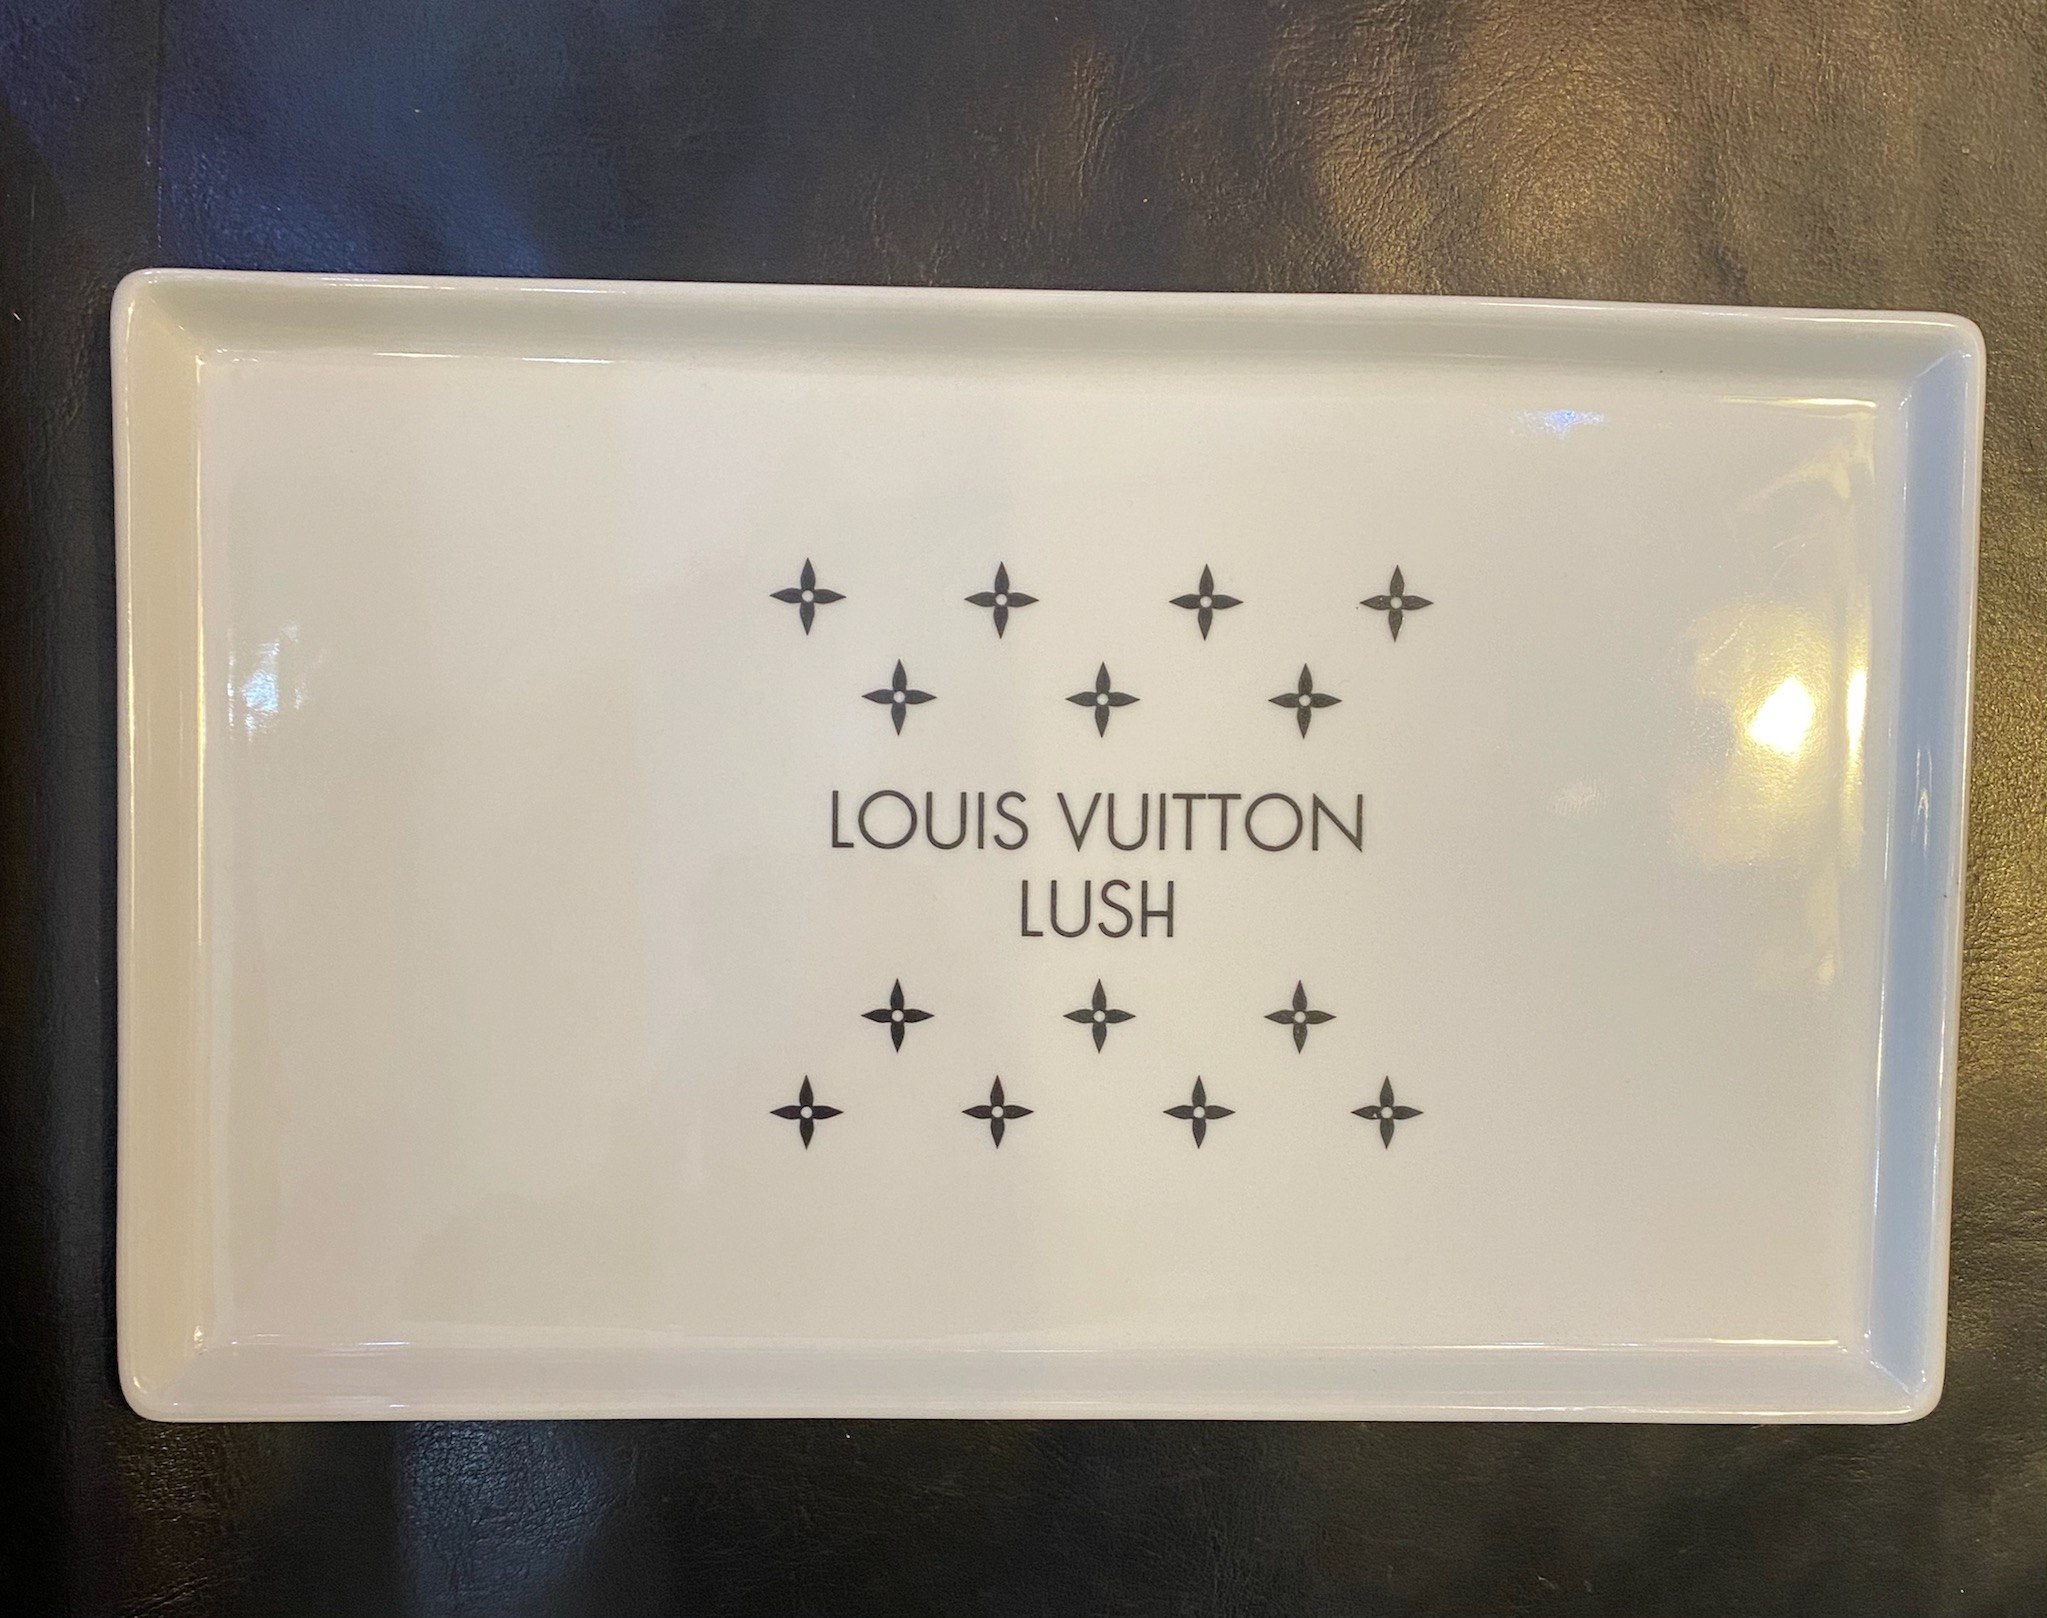 Louis Vuitton Lush Designer Plates - Michael Weems Collection